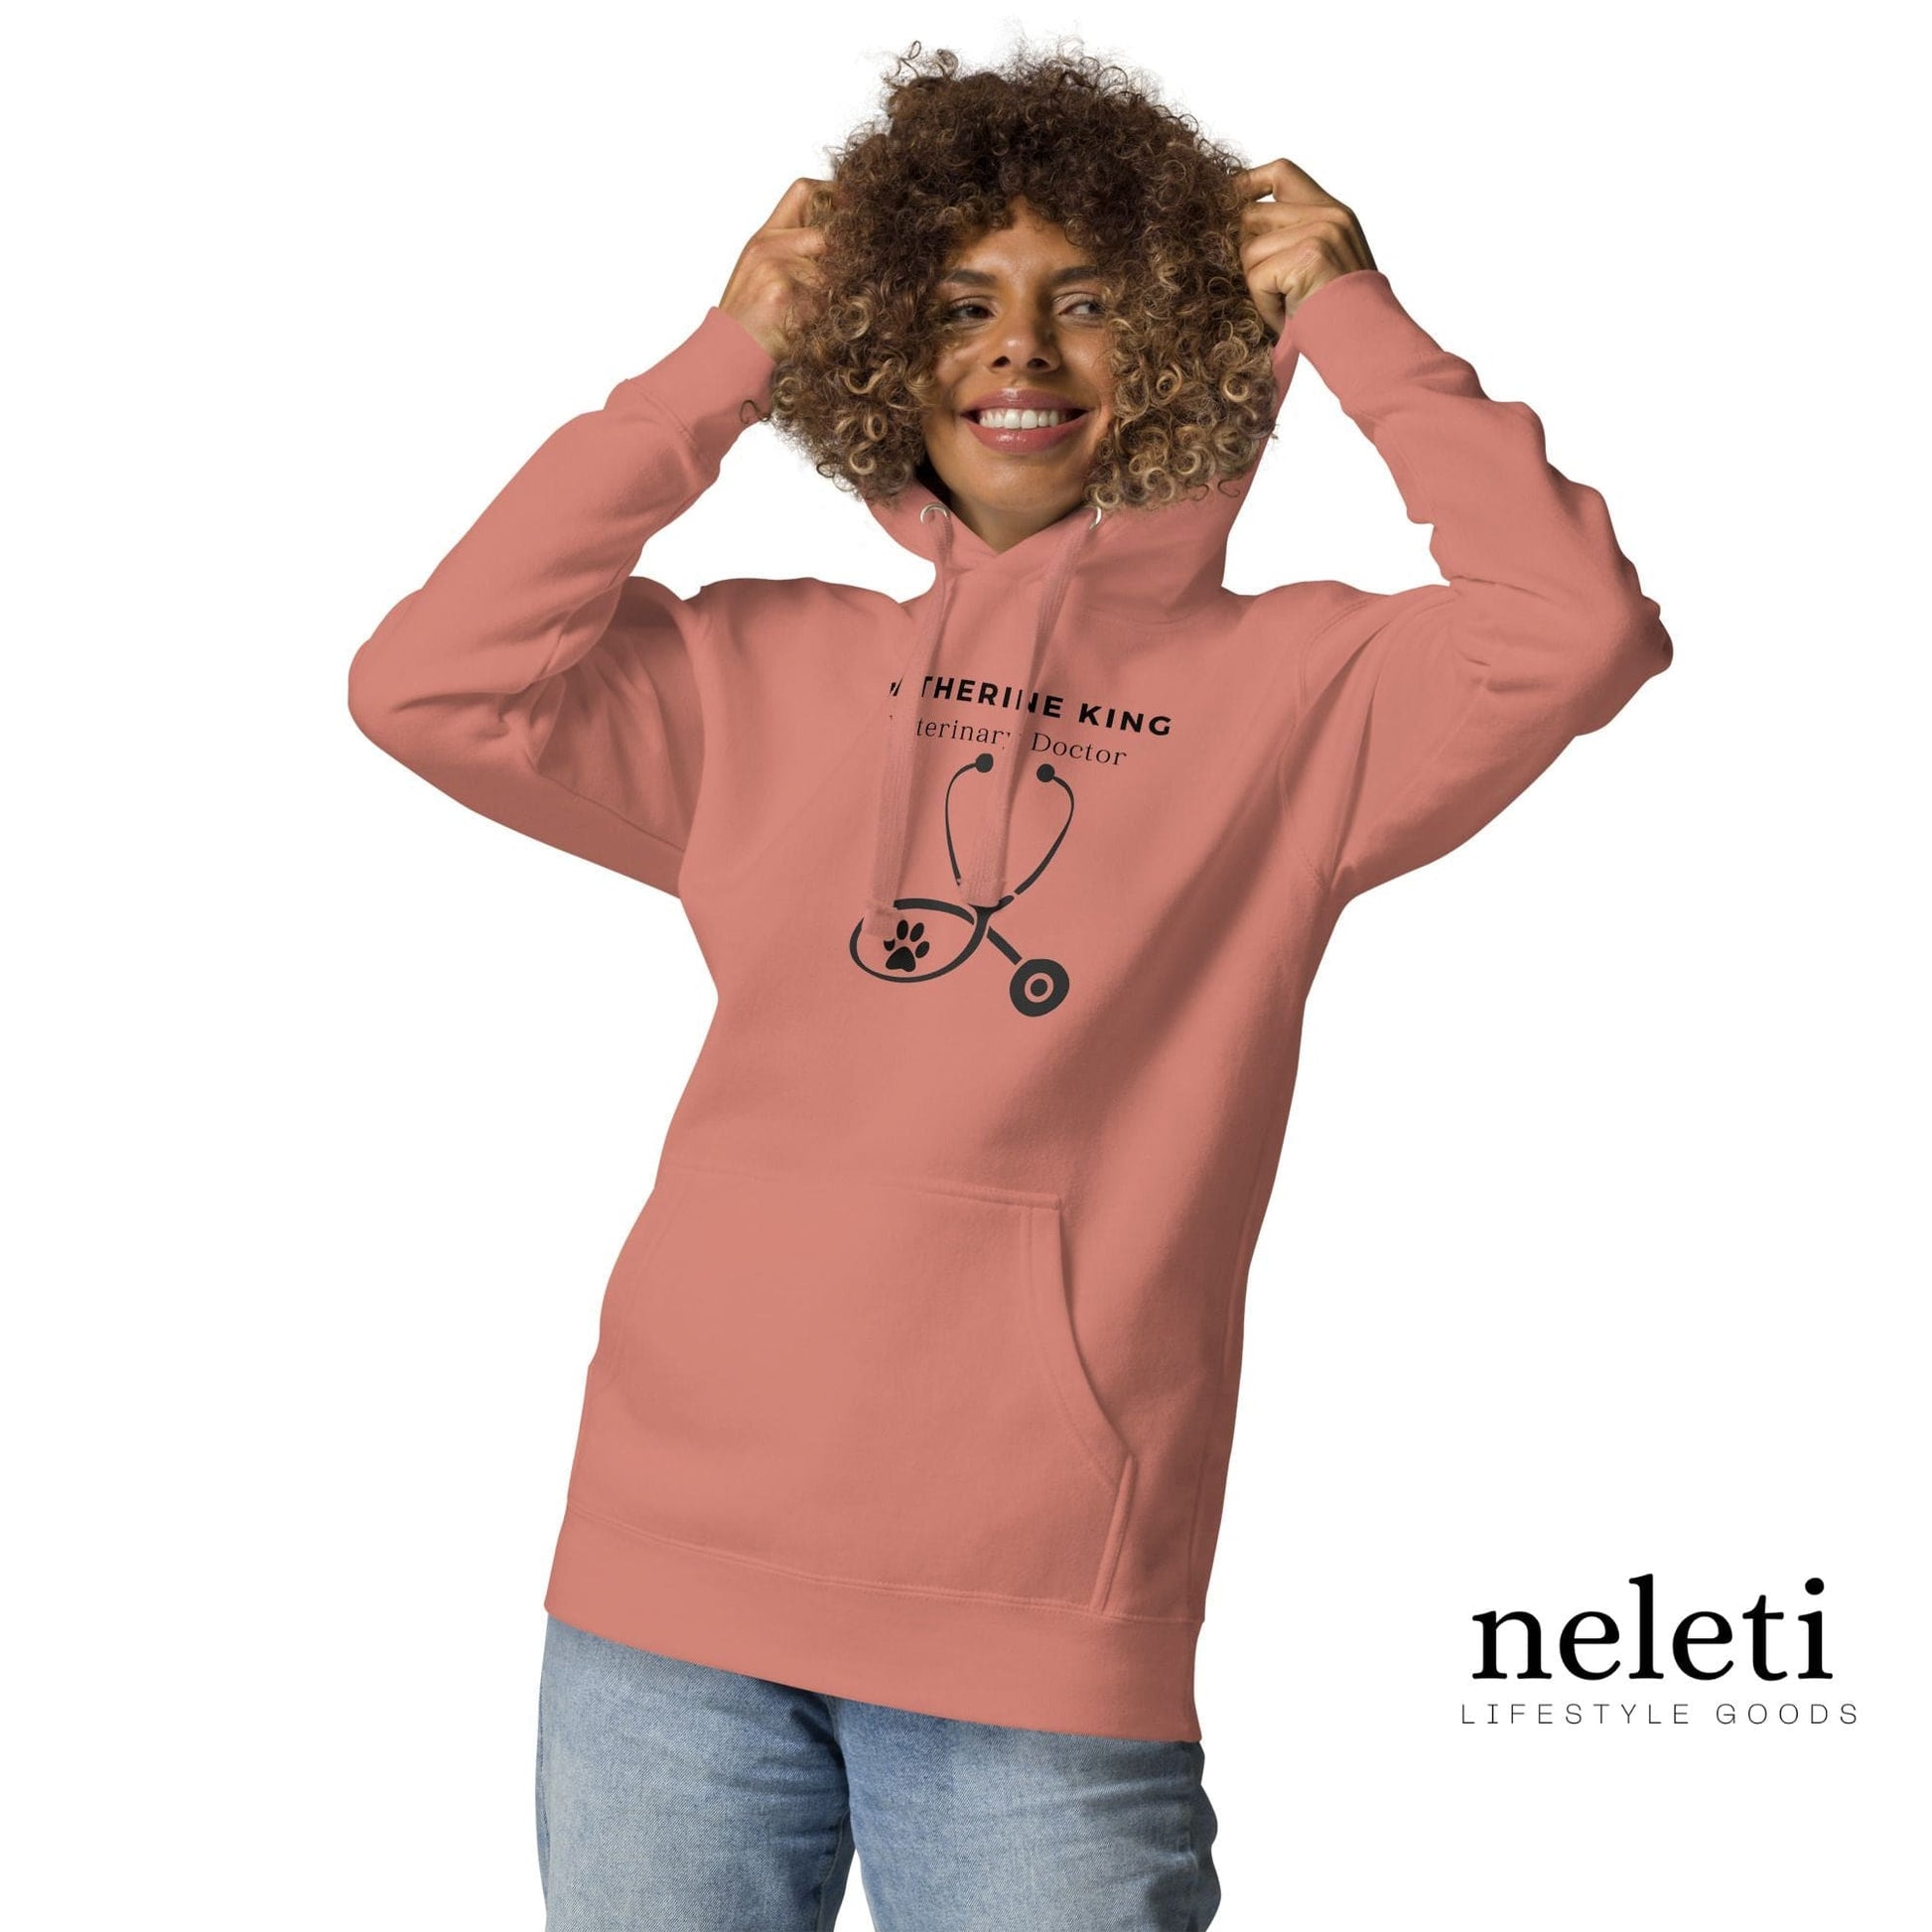 neleti.com-custom-dusty-rose-hoodie-for-veterinarian